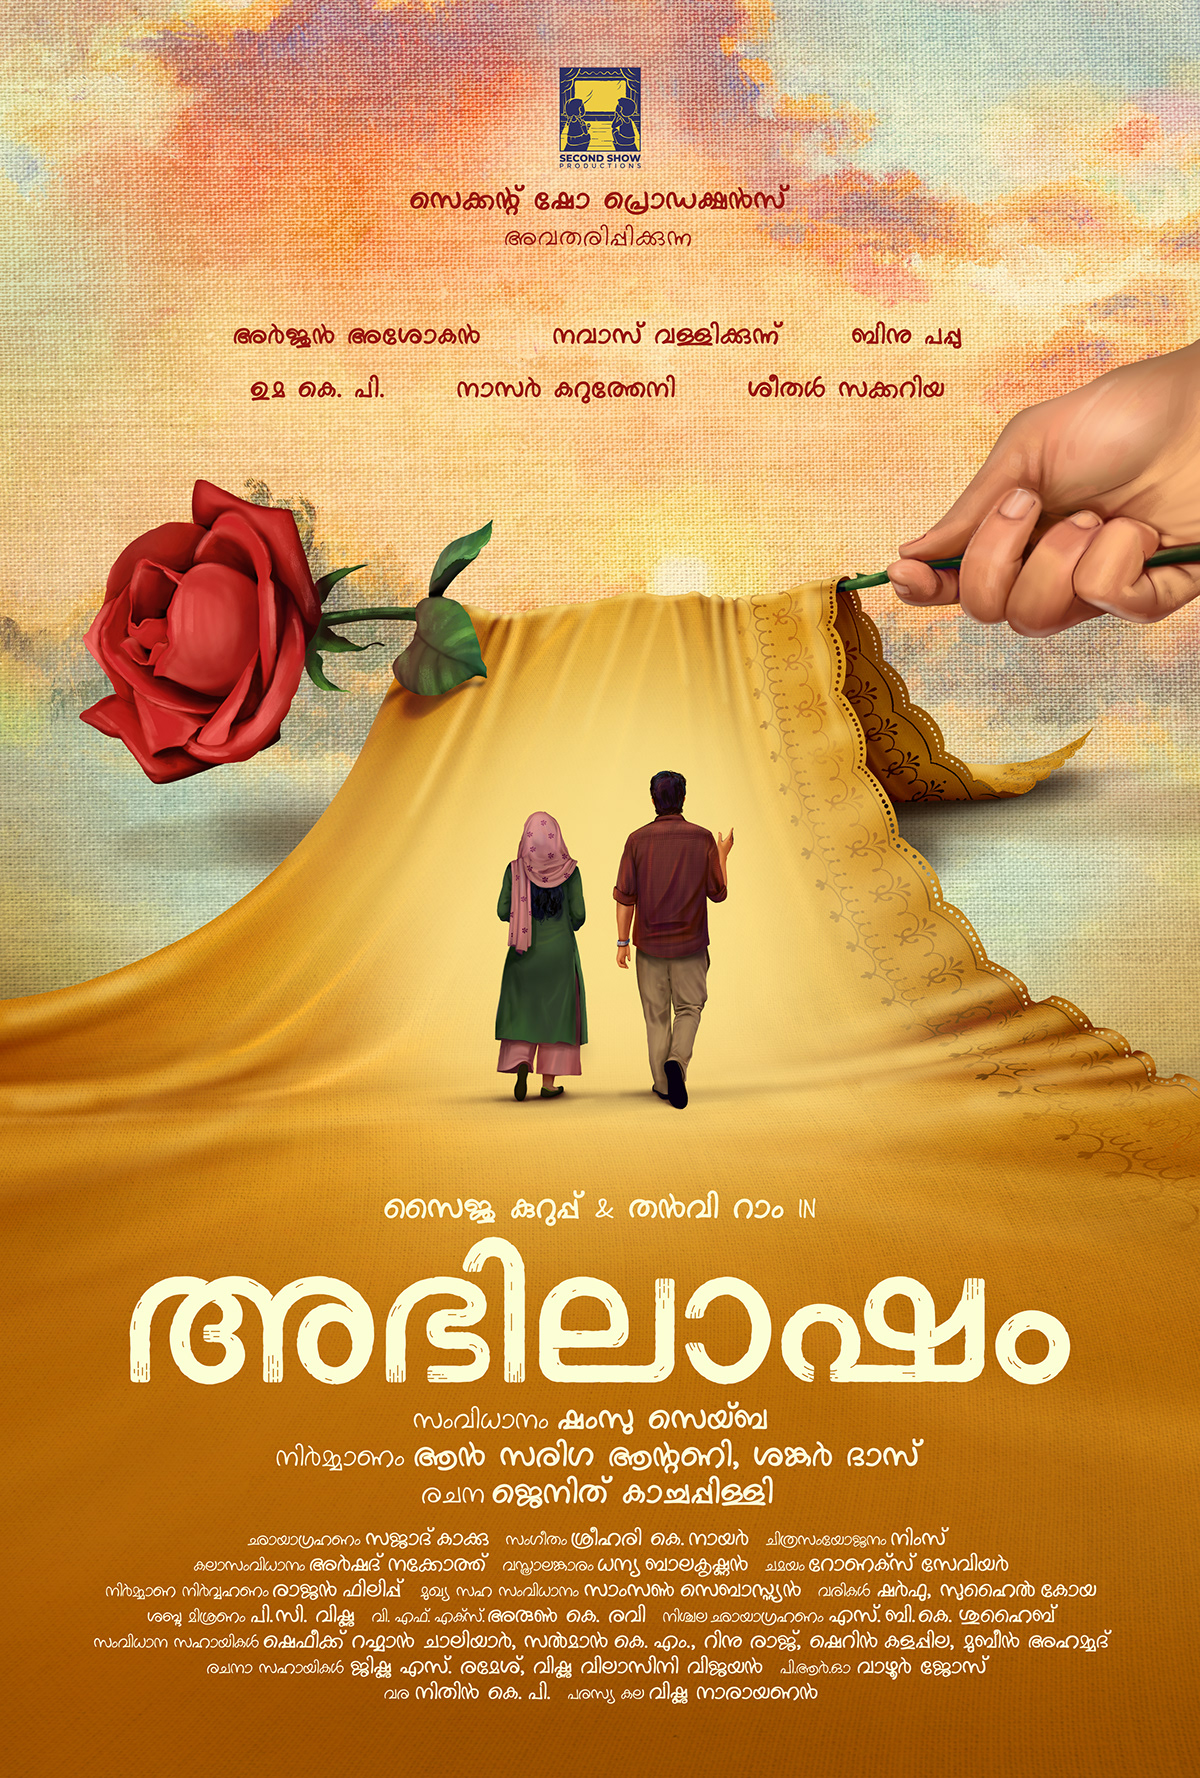 malayalam movie movie poster posters Poster Design Advertising  Abhilasham Abhilasham movie Saiju Kurup thanvi ram Title Look